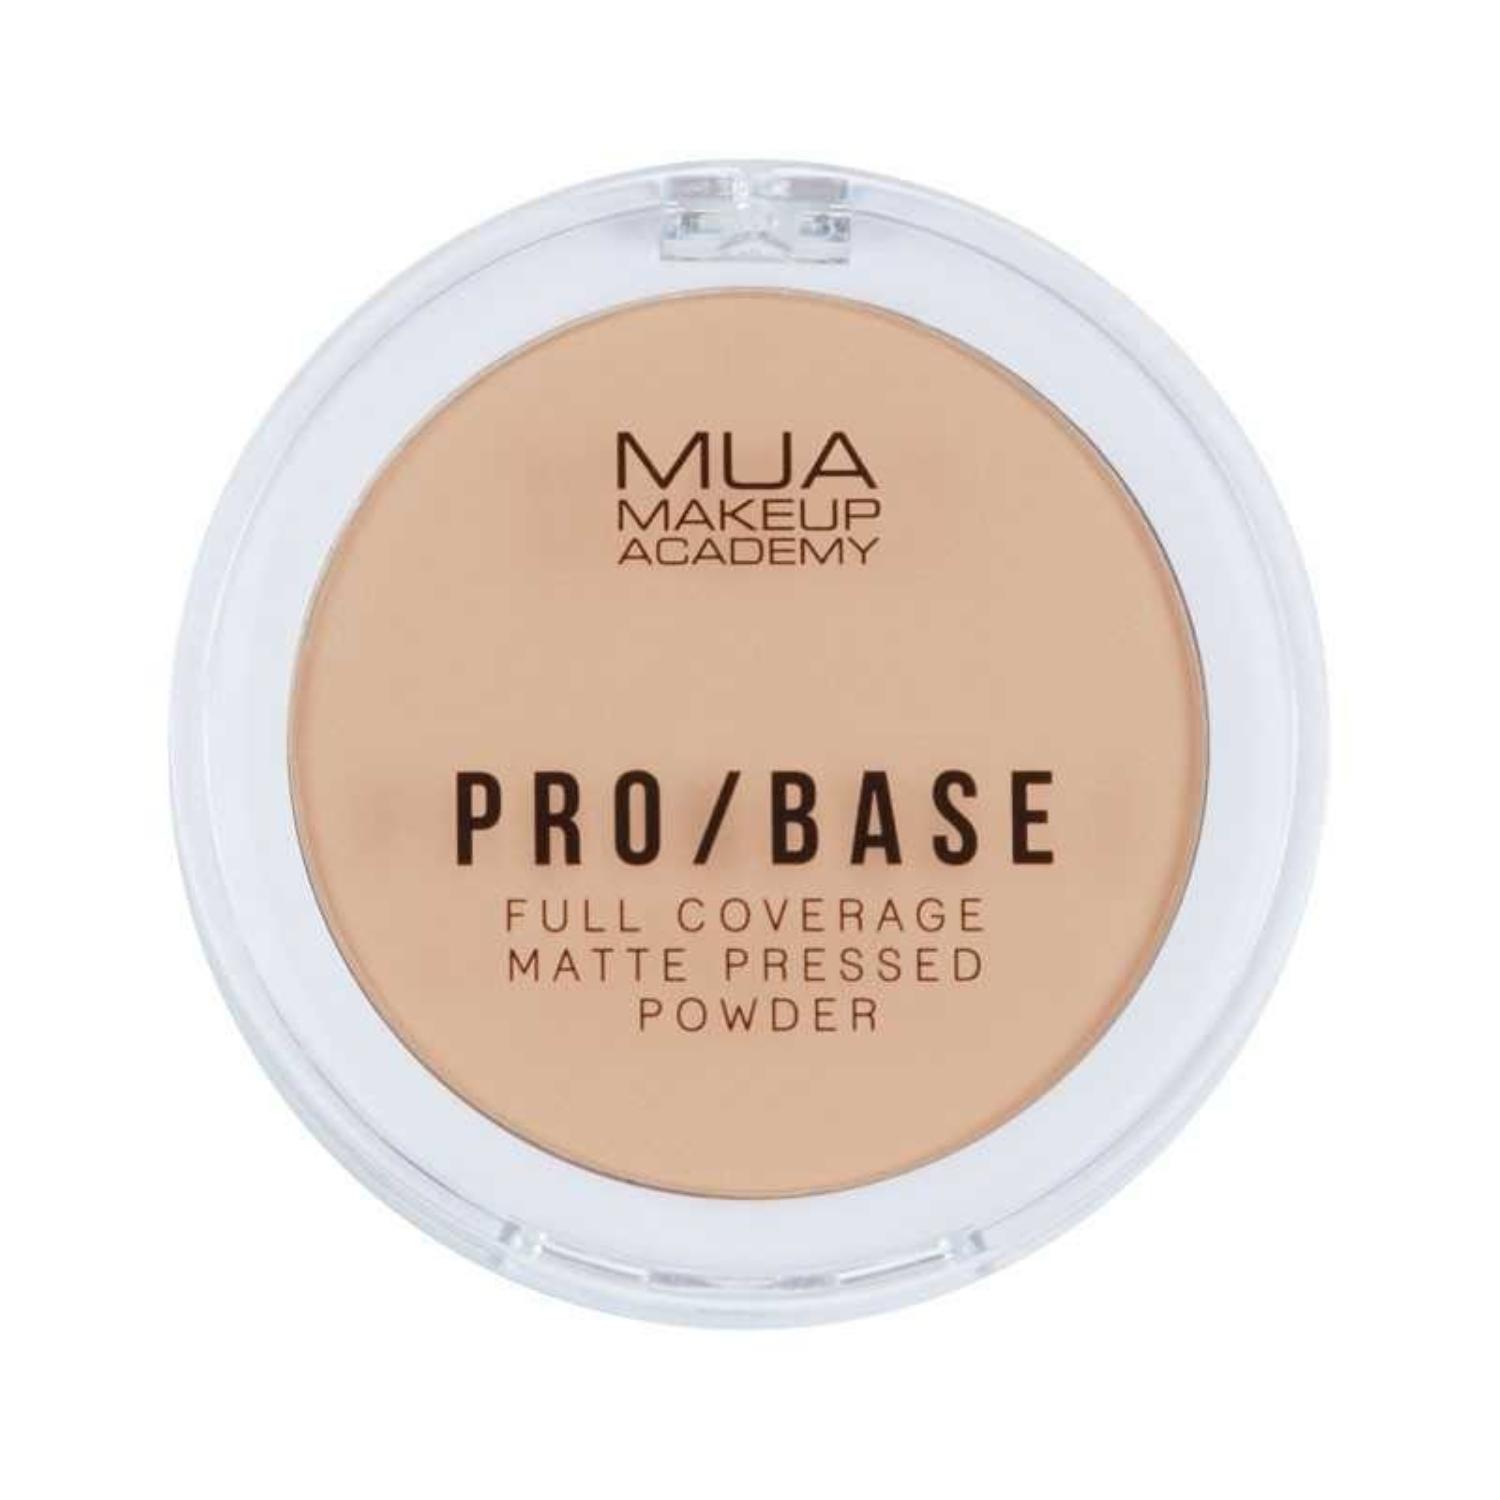 mua make up academy pro / base full cover matte powder - no. 130 (6.5g)